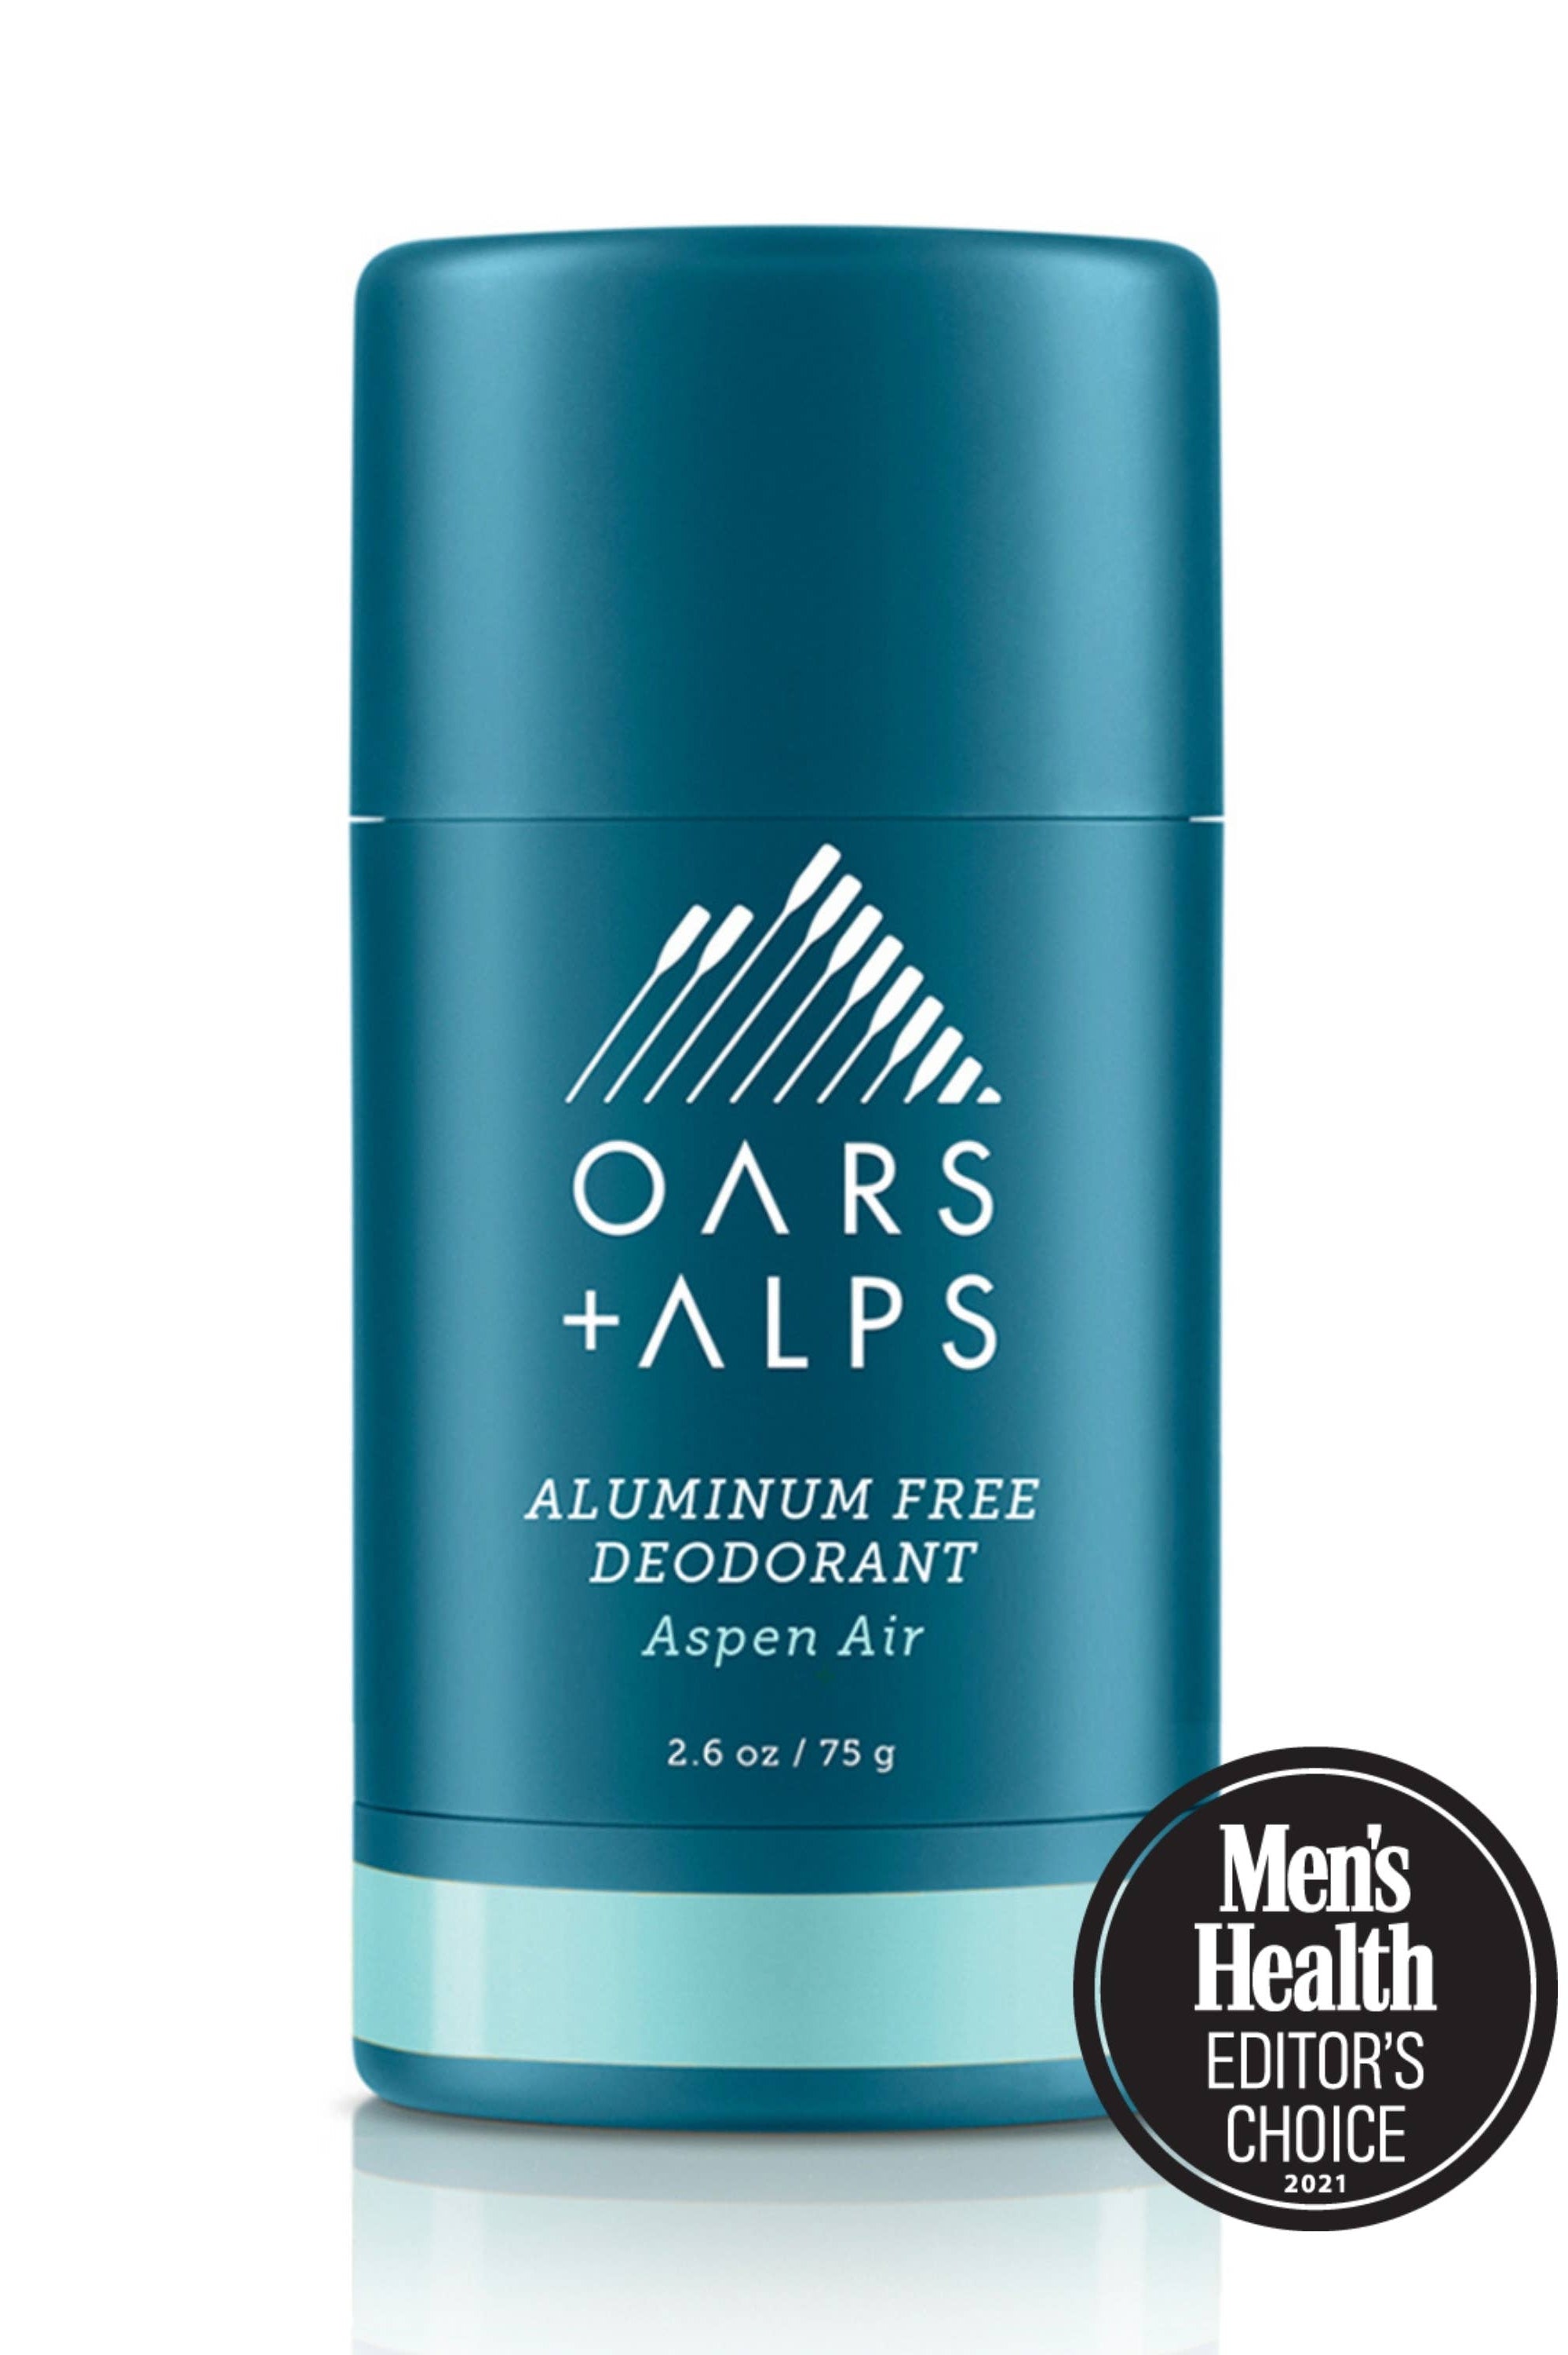 Aluminum Free Deodorant, Clean Ingredients - Aspen Air Oars and Alps